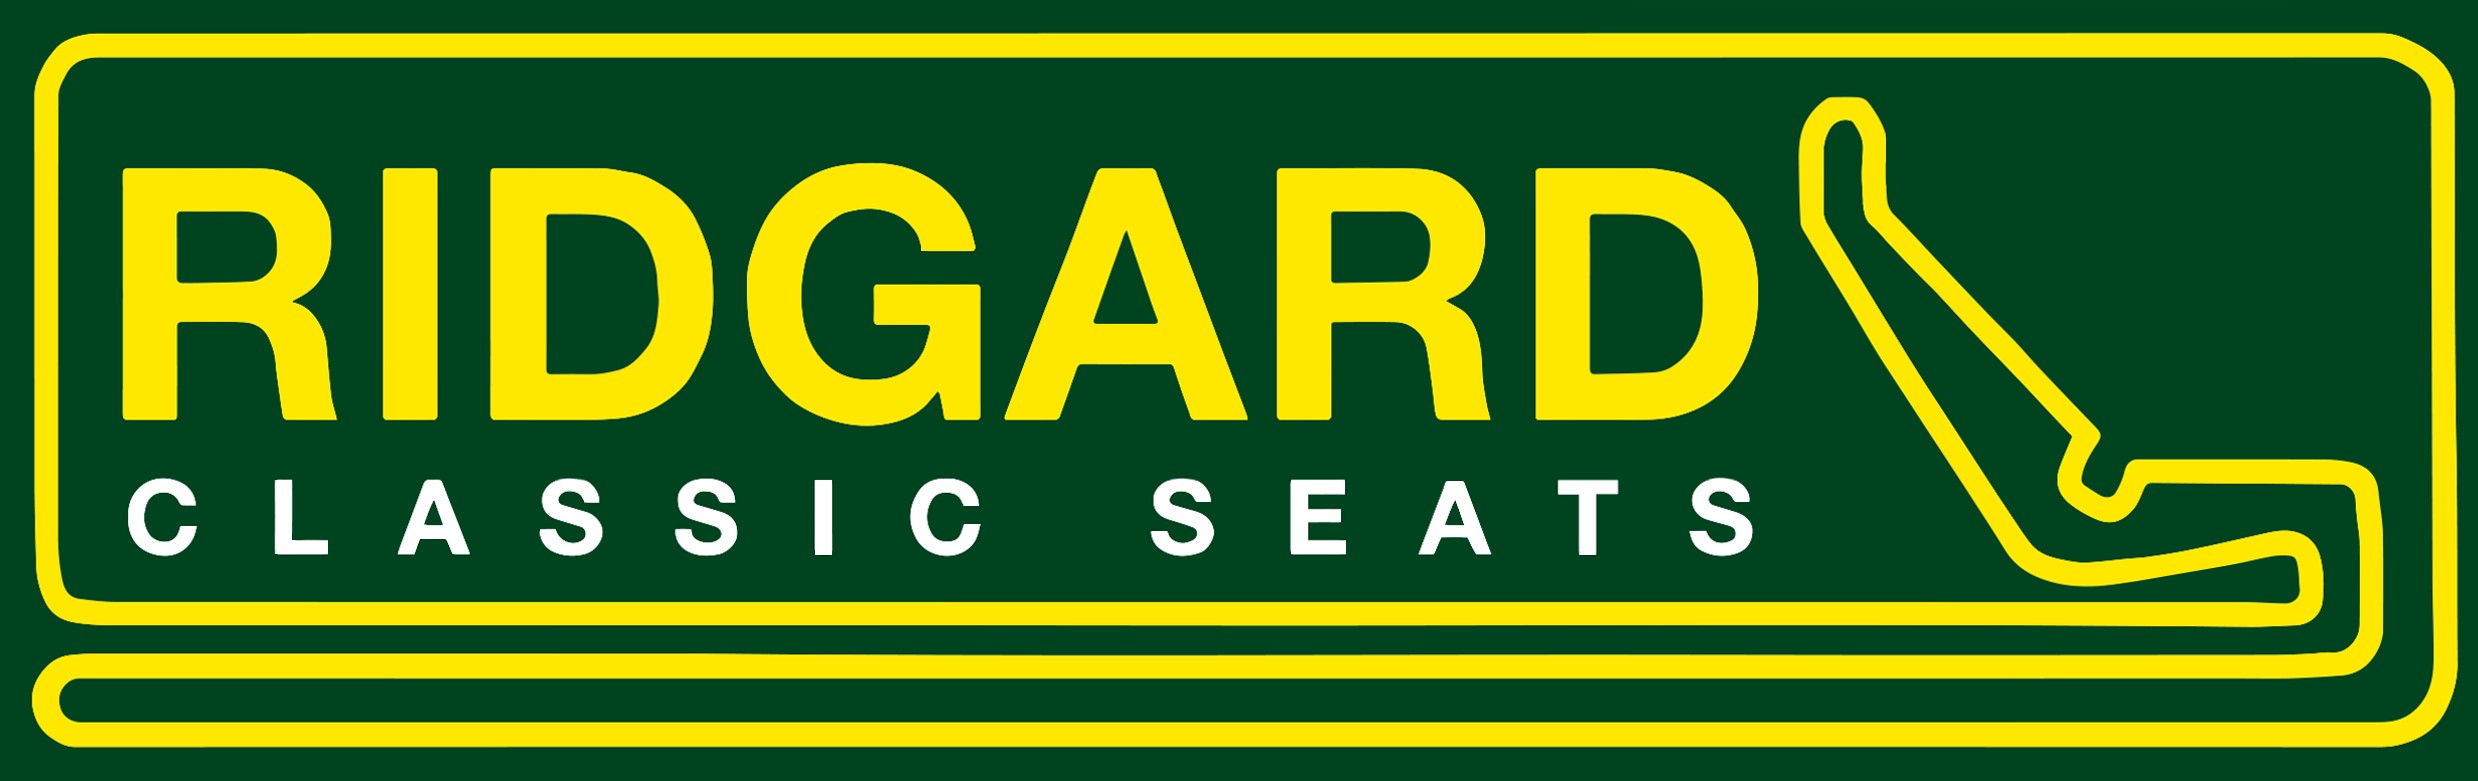 Ridgard Classic Seats Ltd Evoke Classics Trade Directory